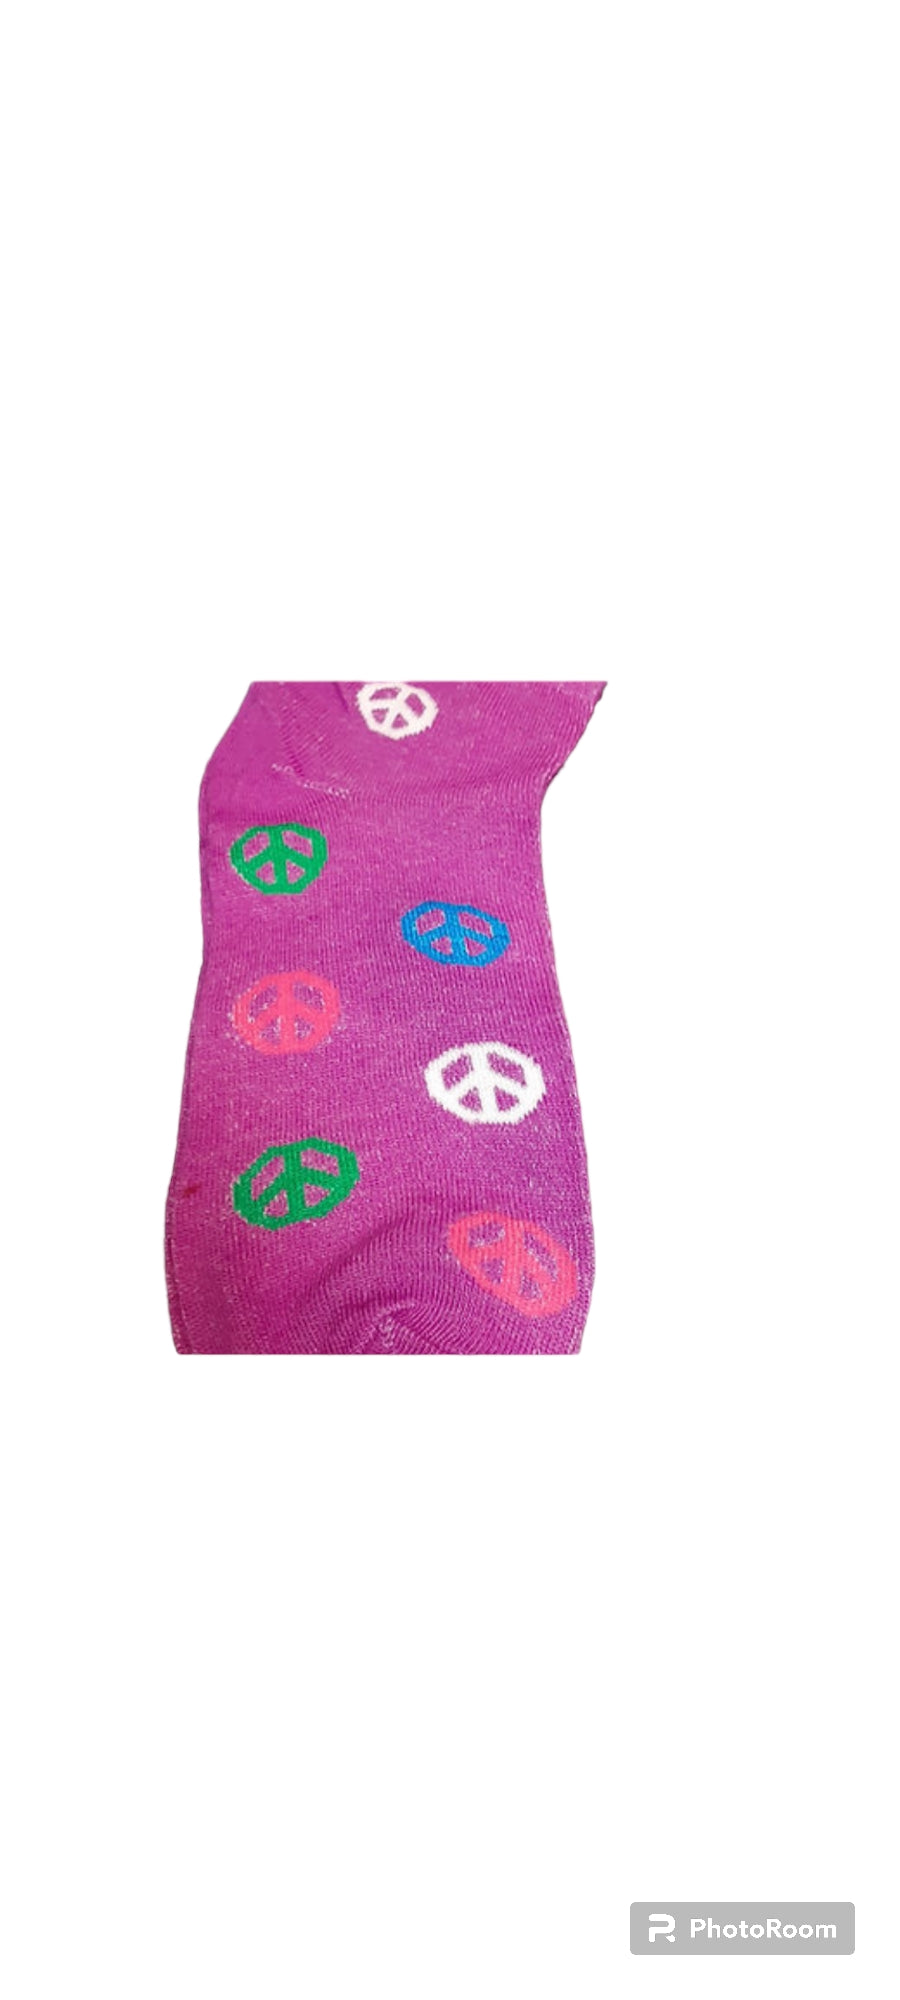 Peace sign socks